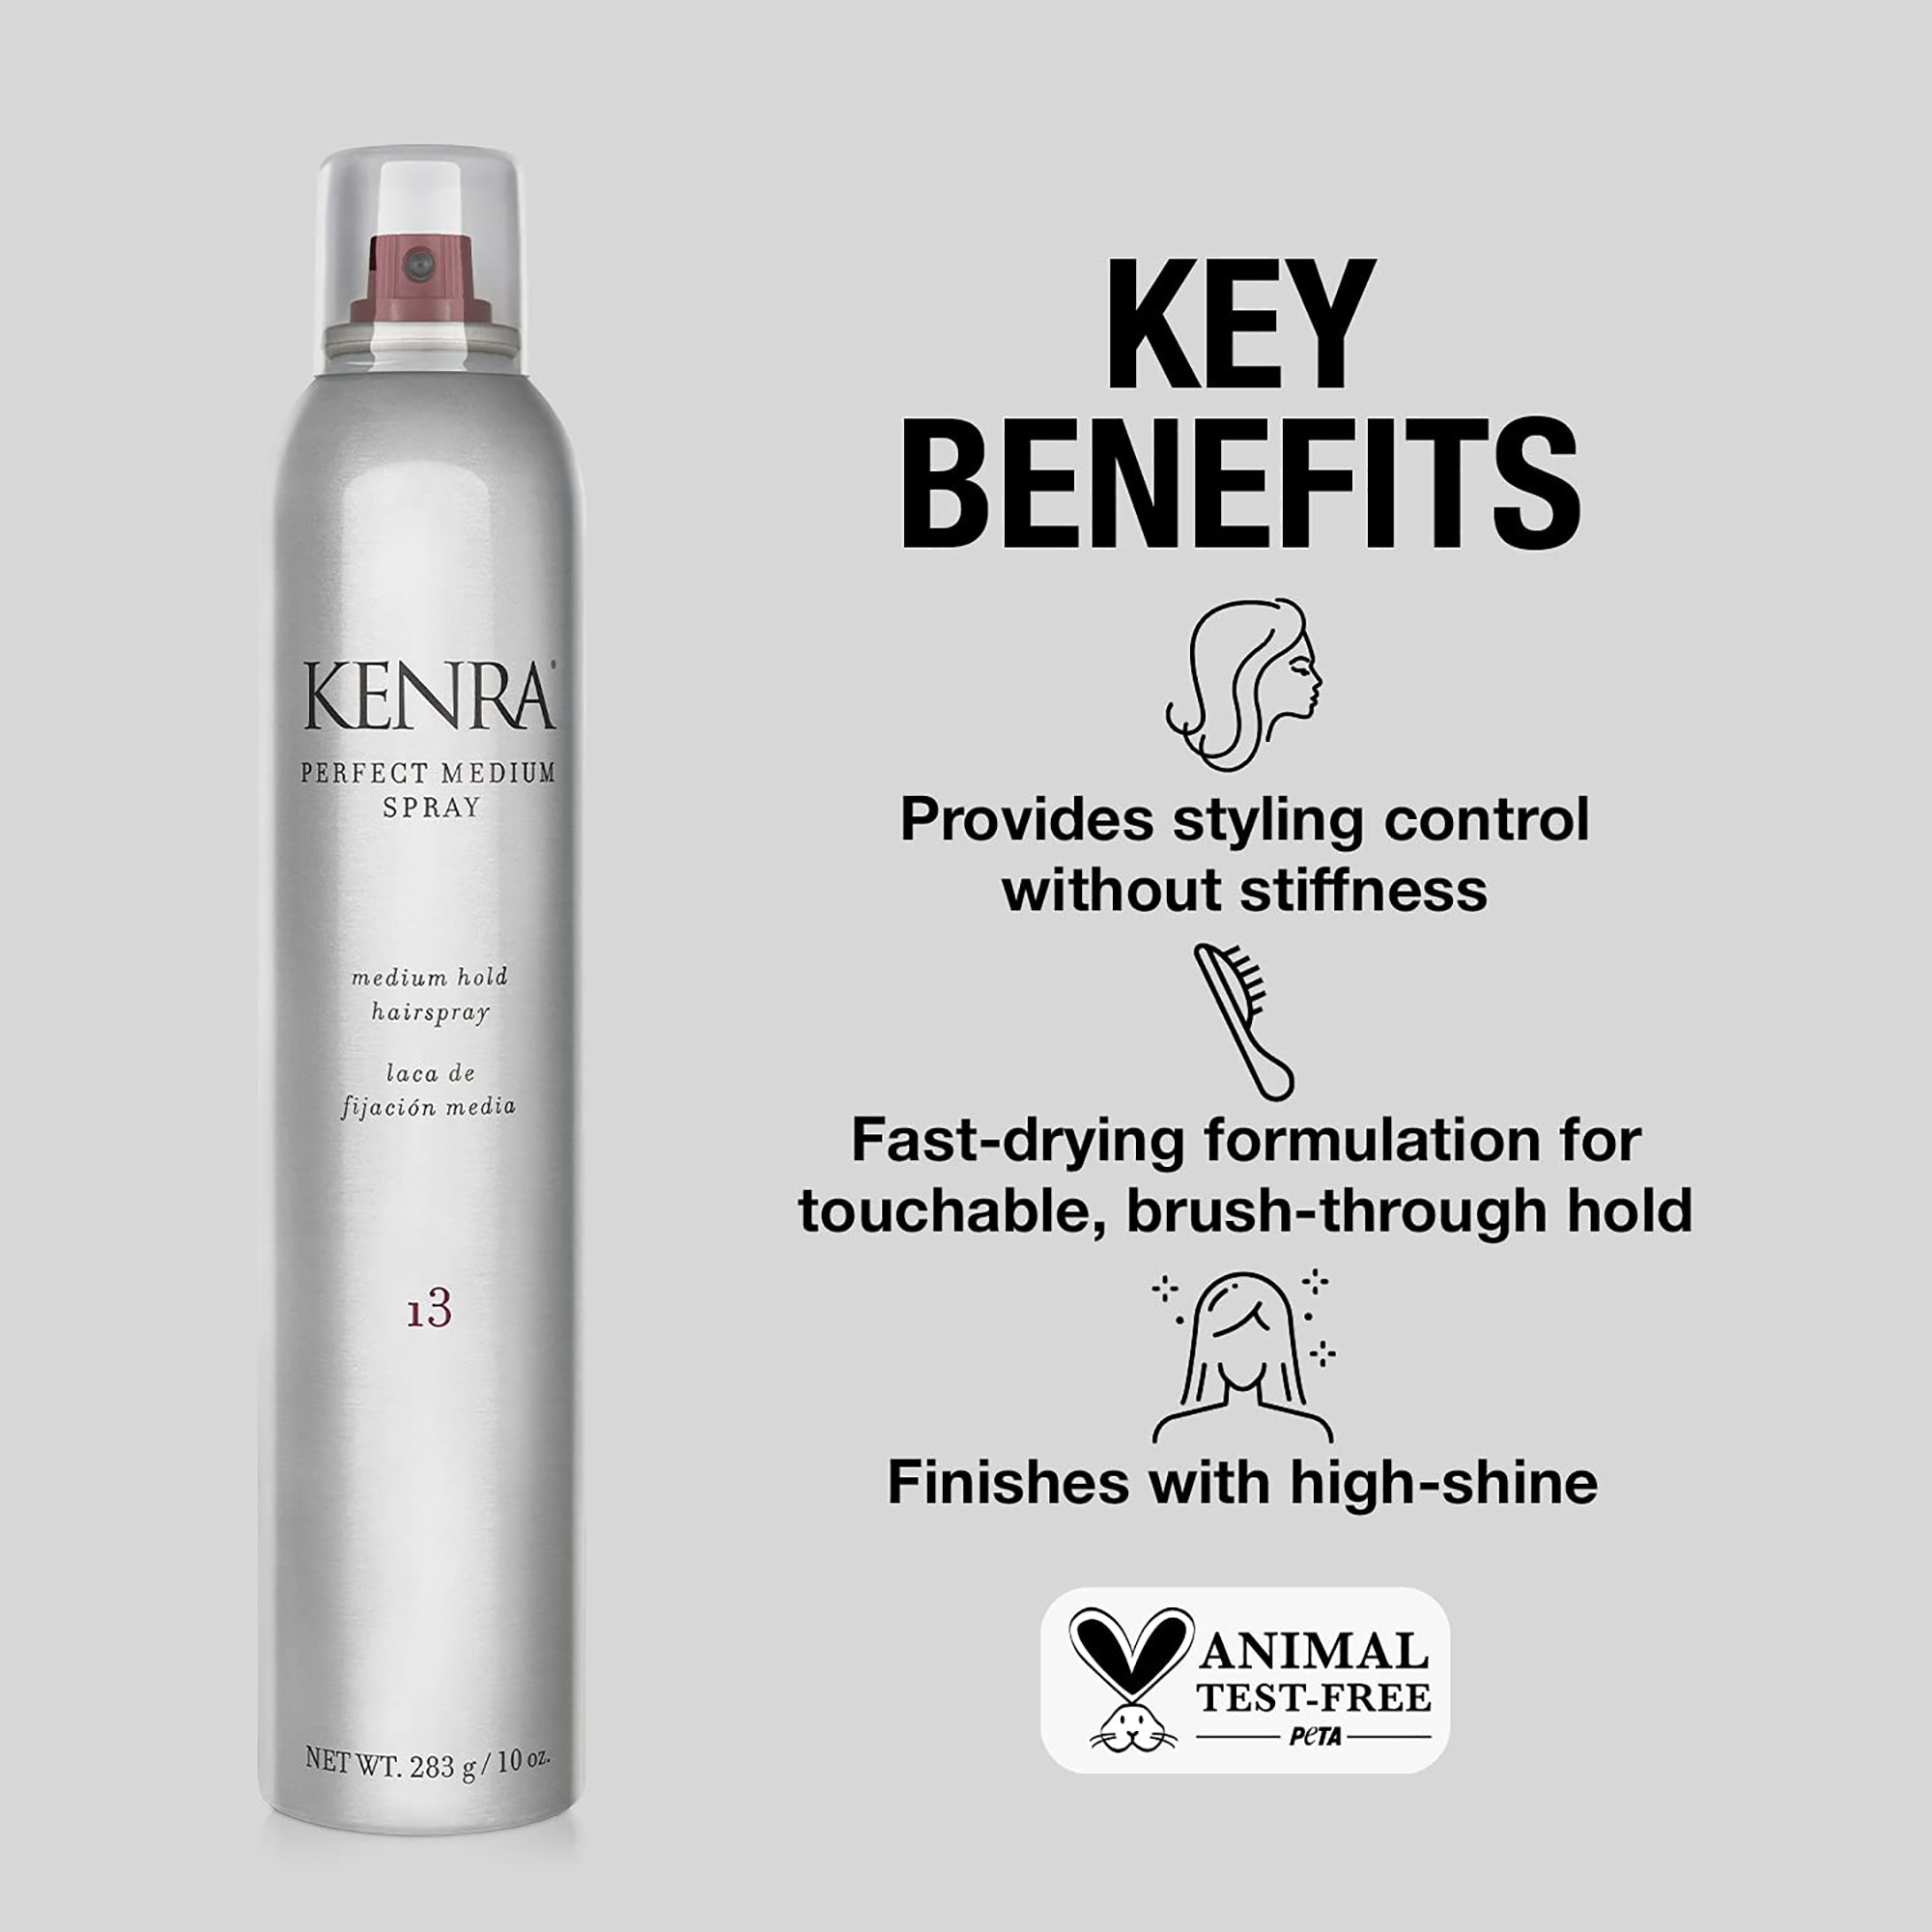 Kenra Professional Perfect Medium Spray 13 55% VOC - 10oz / 10OZ